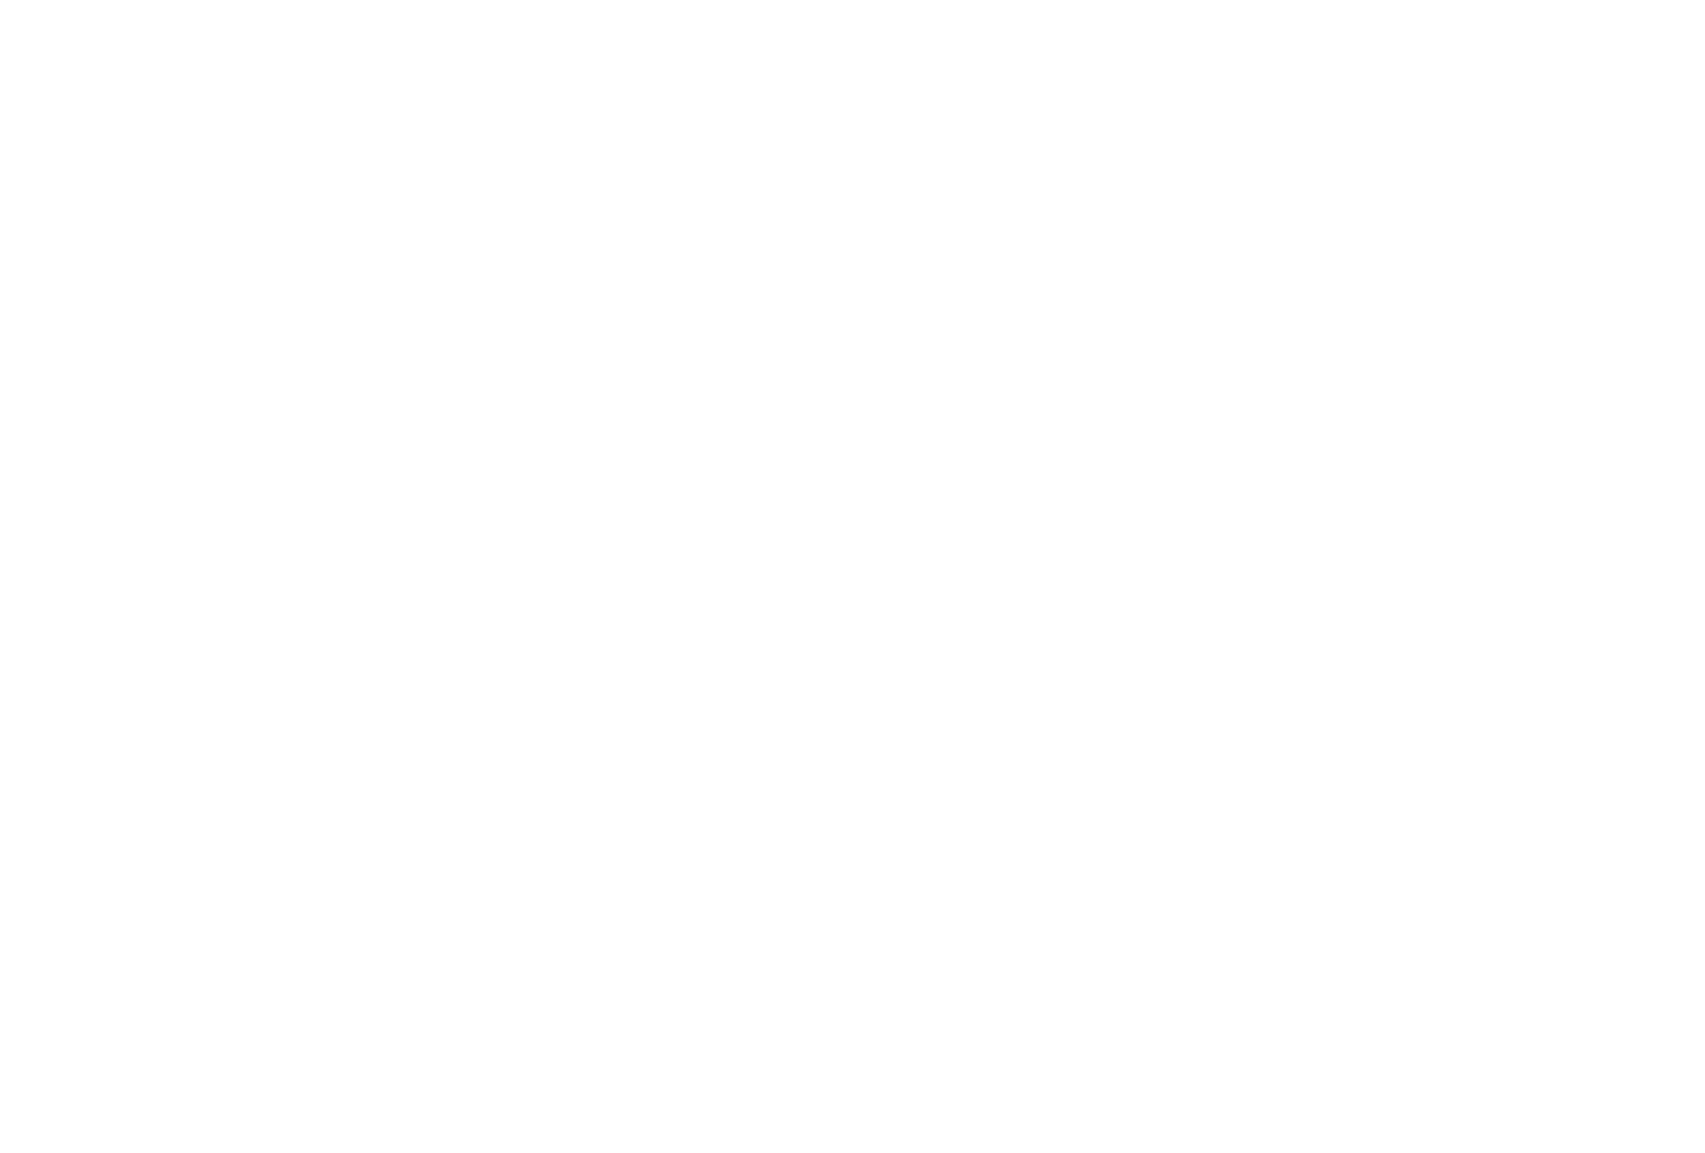 Starstuff Travel by Chris